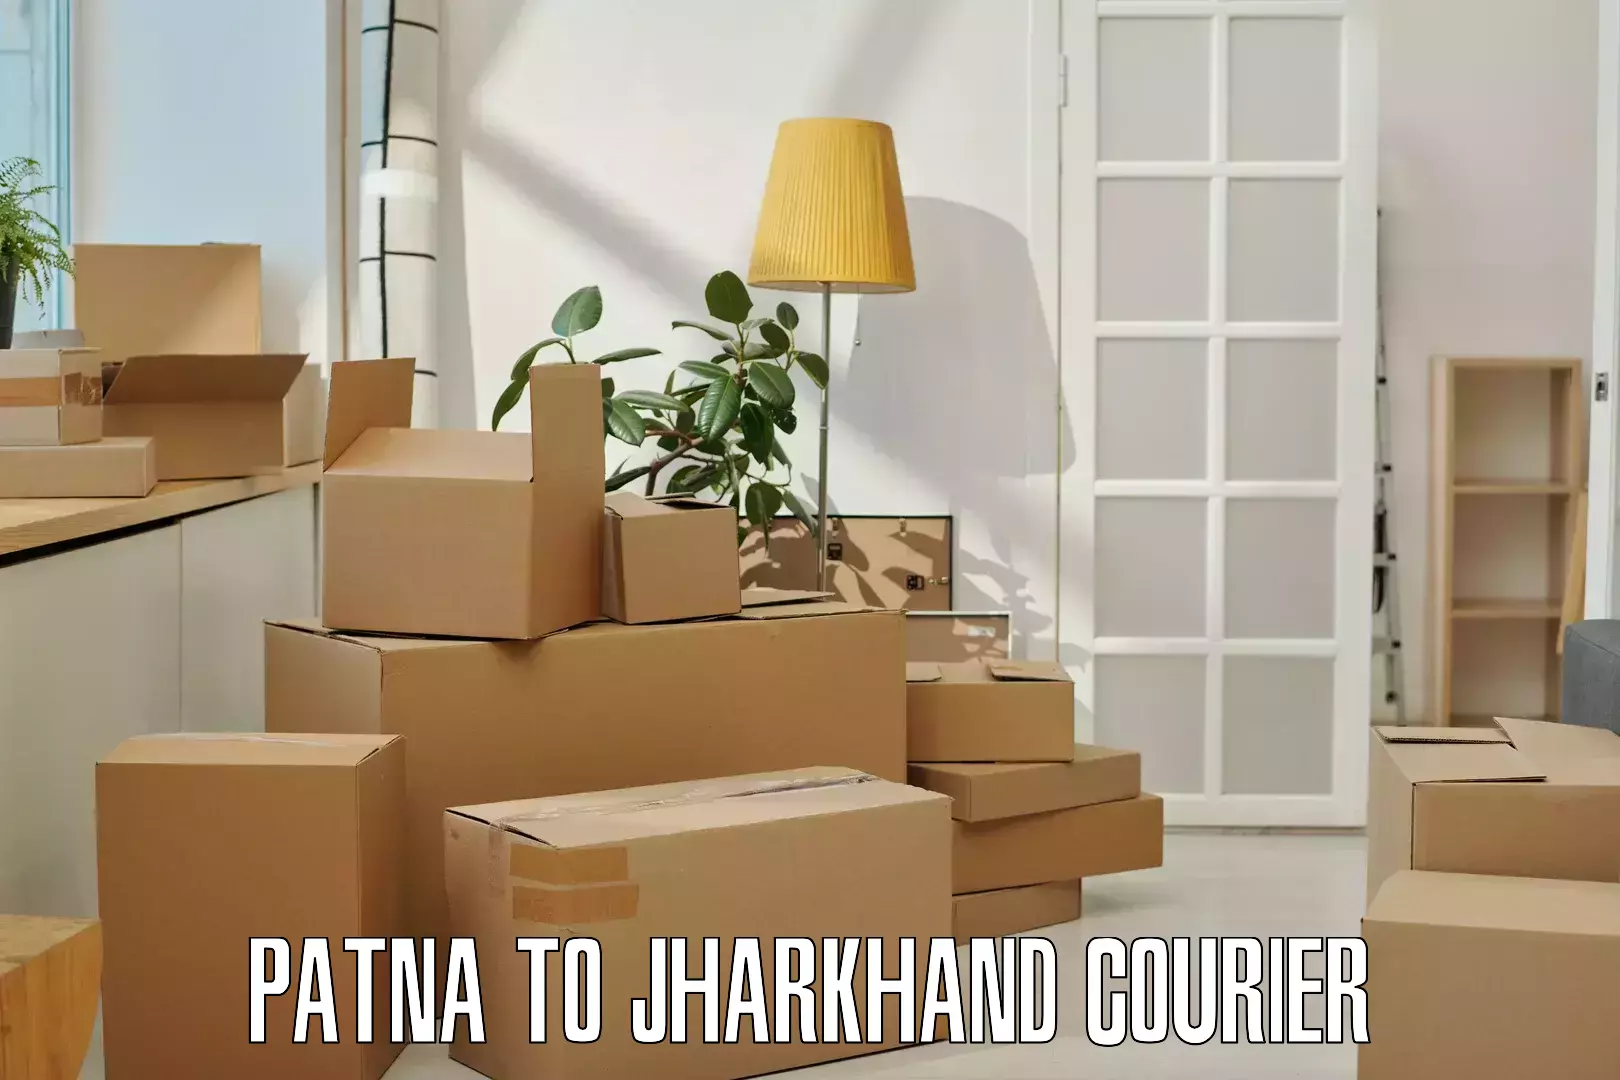 Nationwide shipping capabilities Patna to IIIT Ranchi